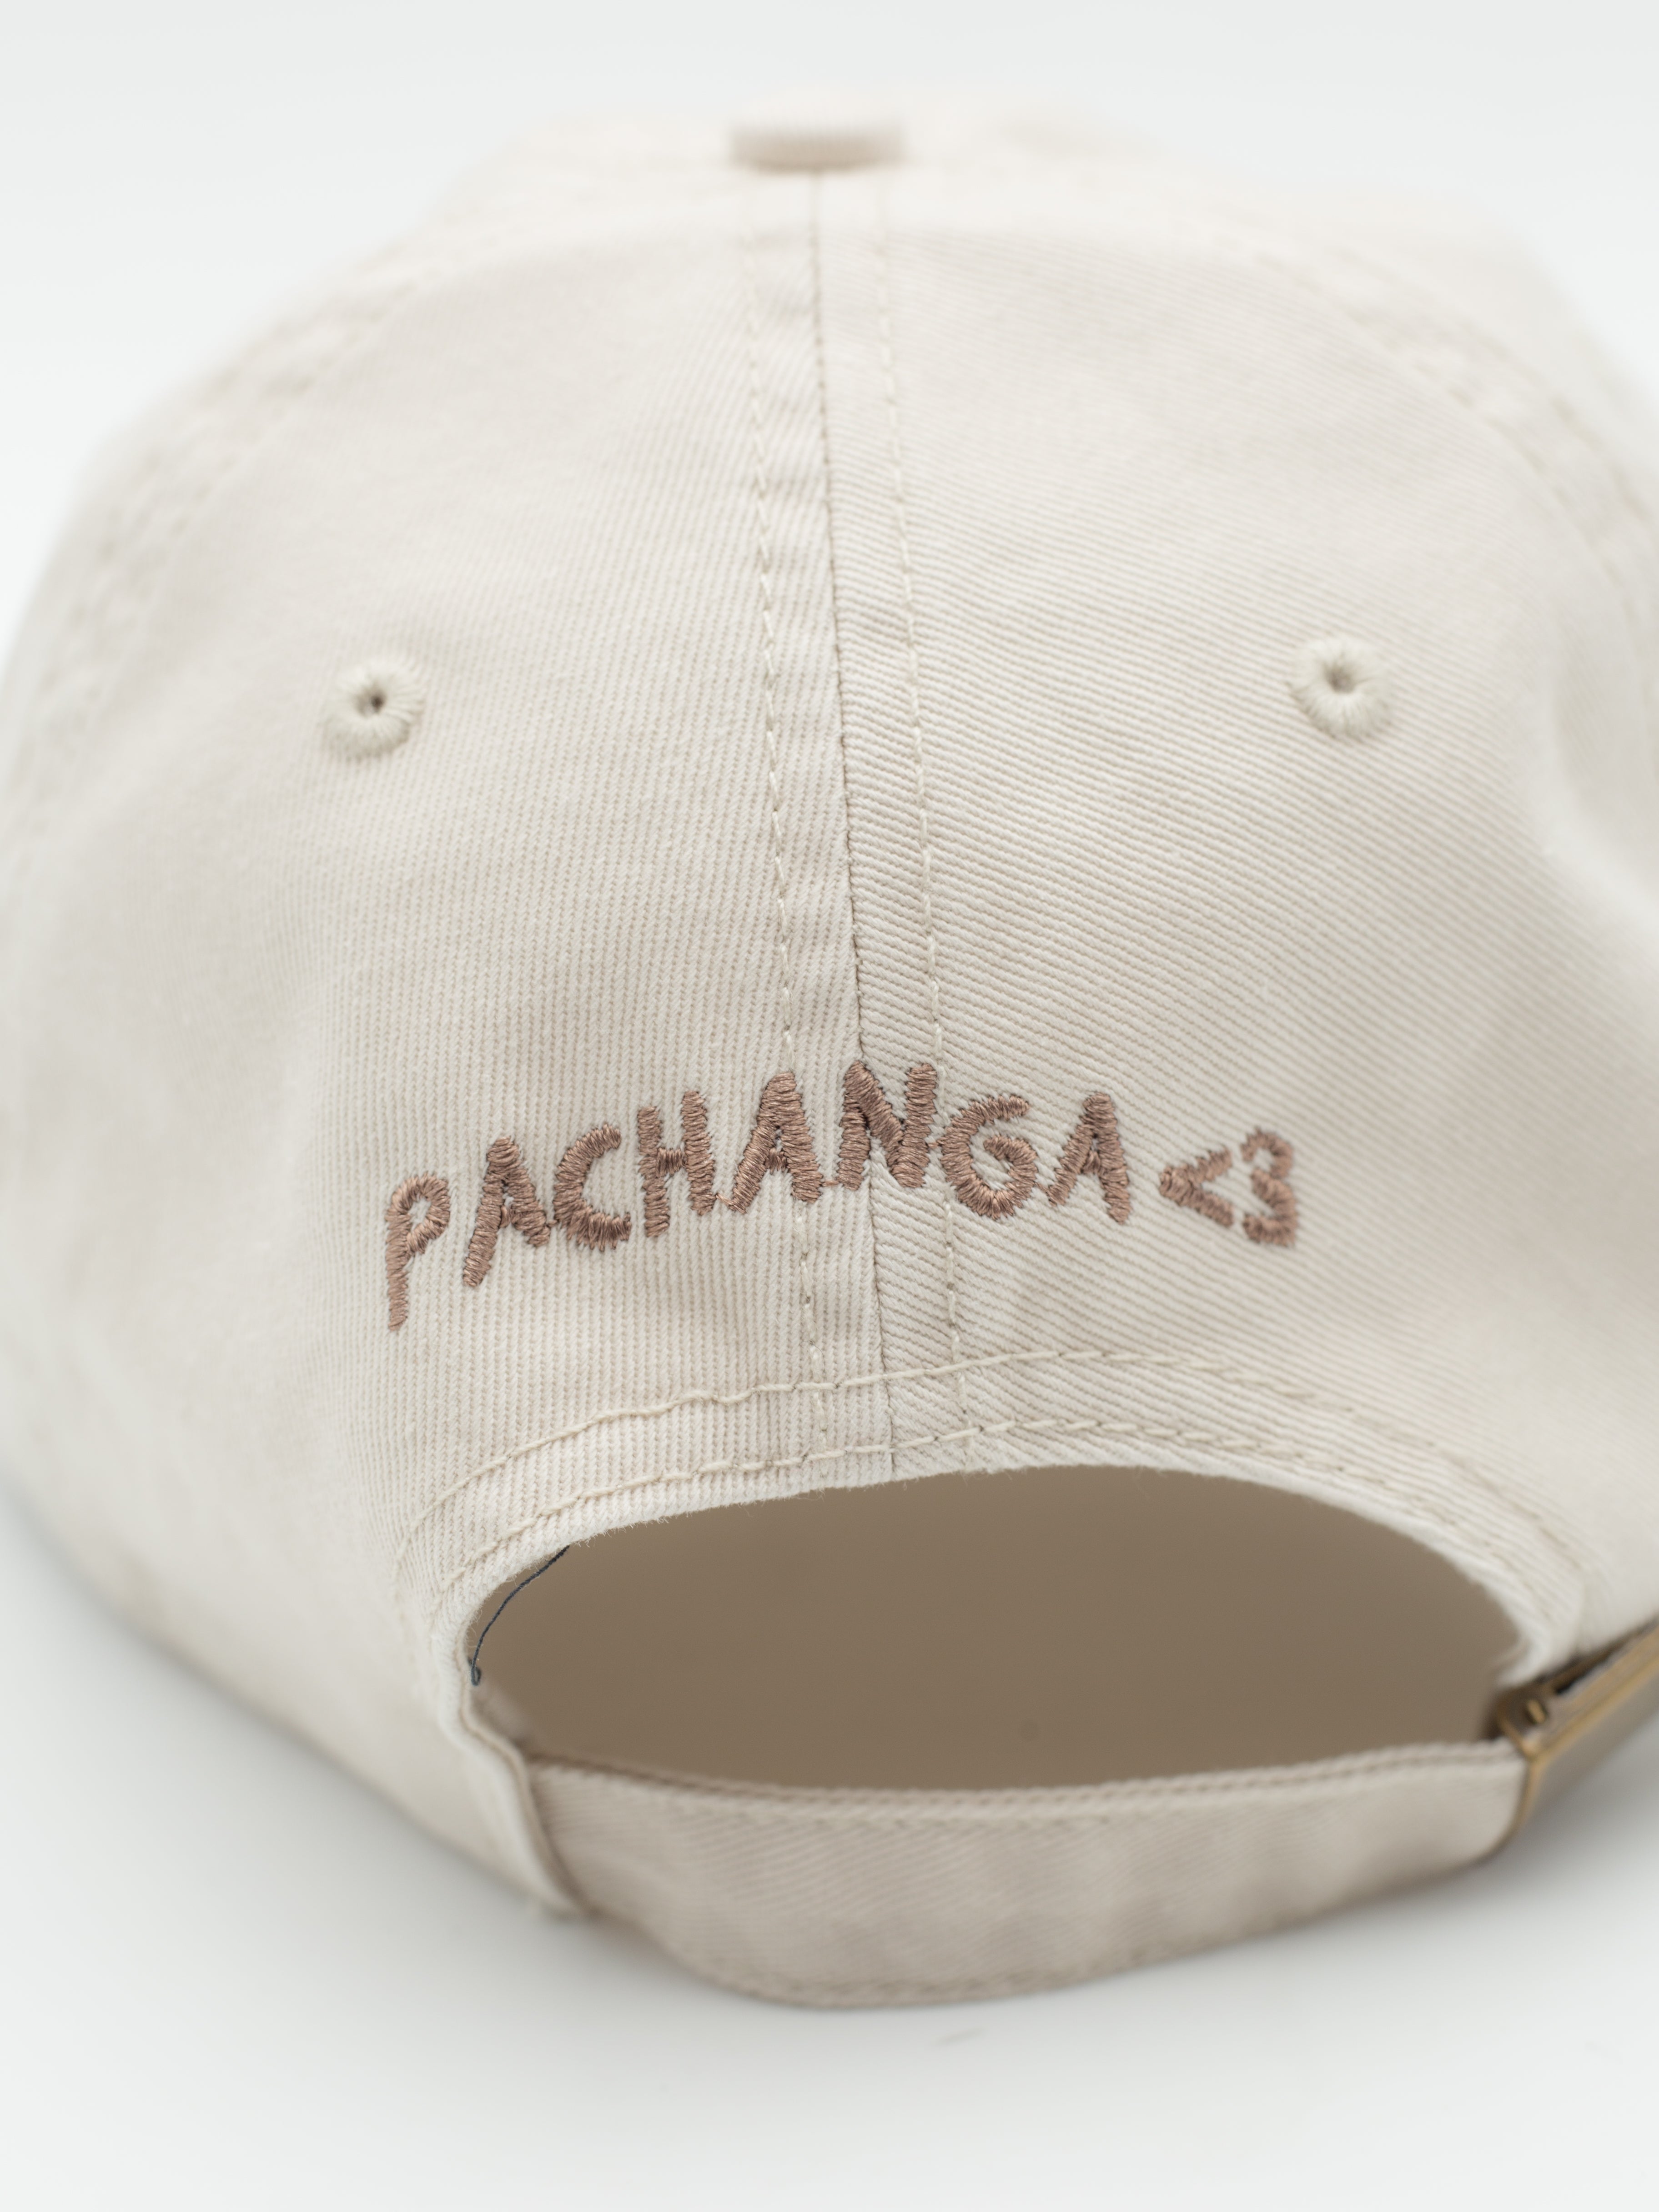 Pachanga dad hat